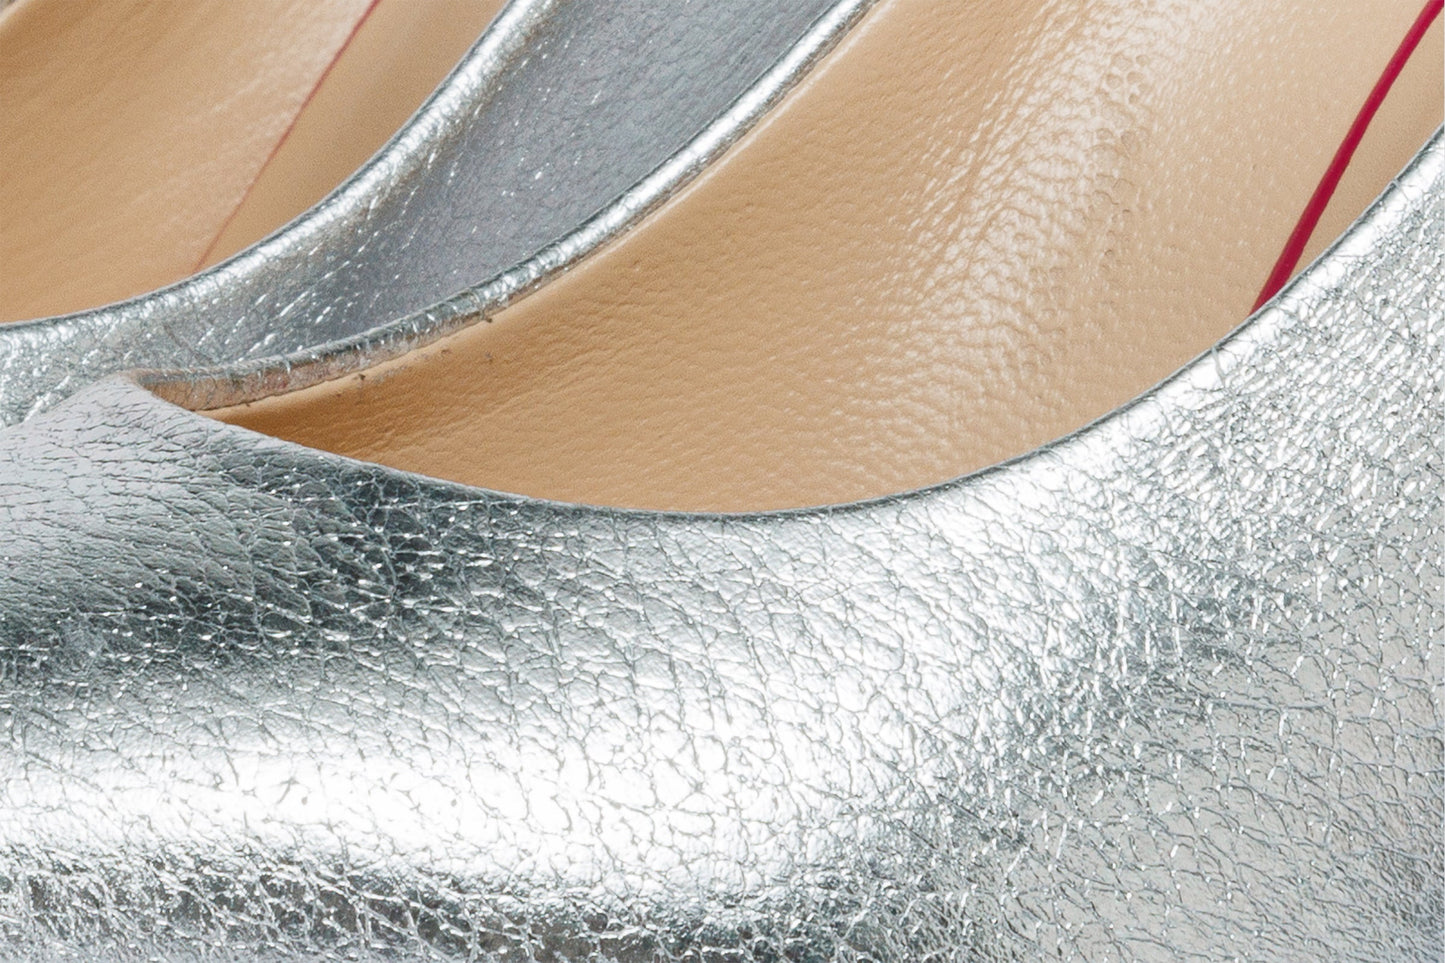 The Ege Silver Leather Pump Fuchsia Sole Women Shoe